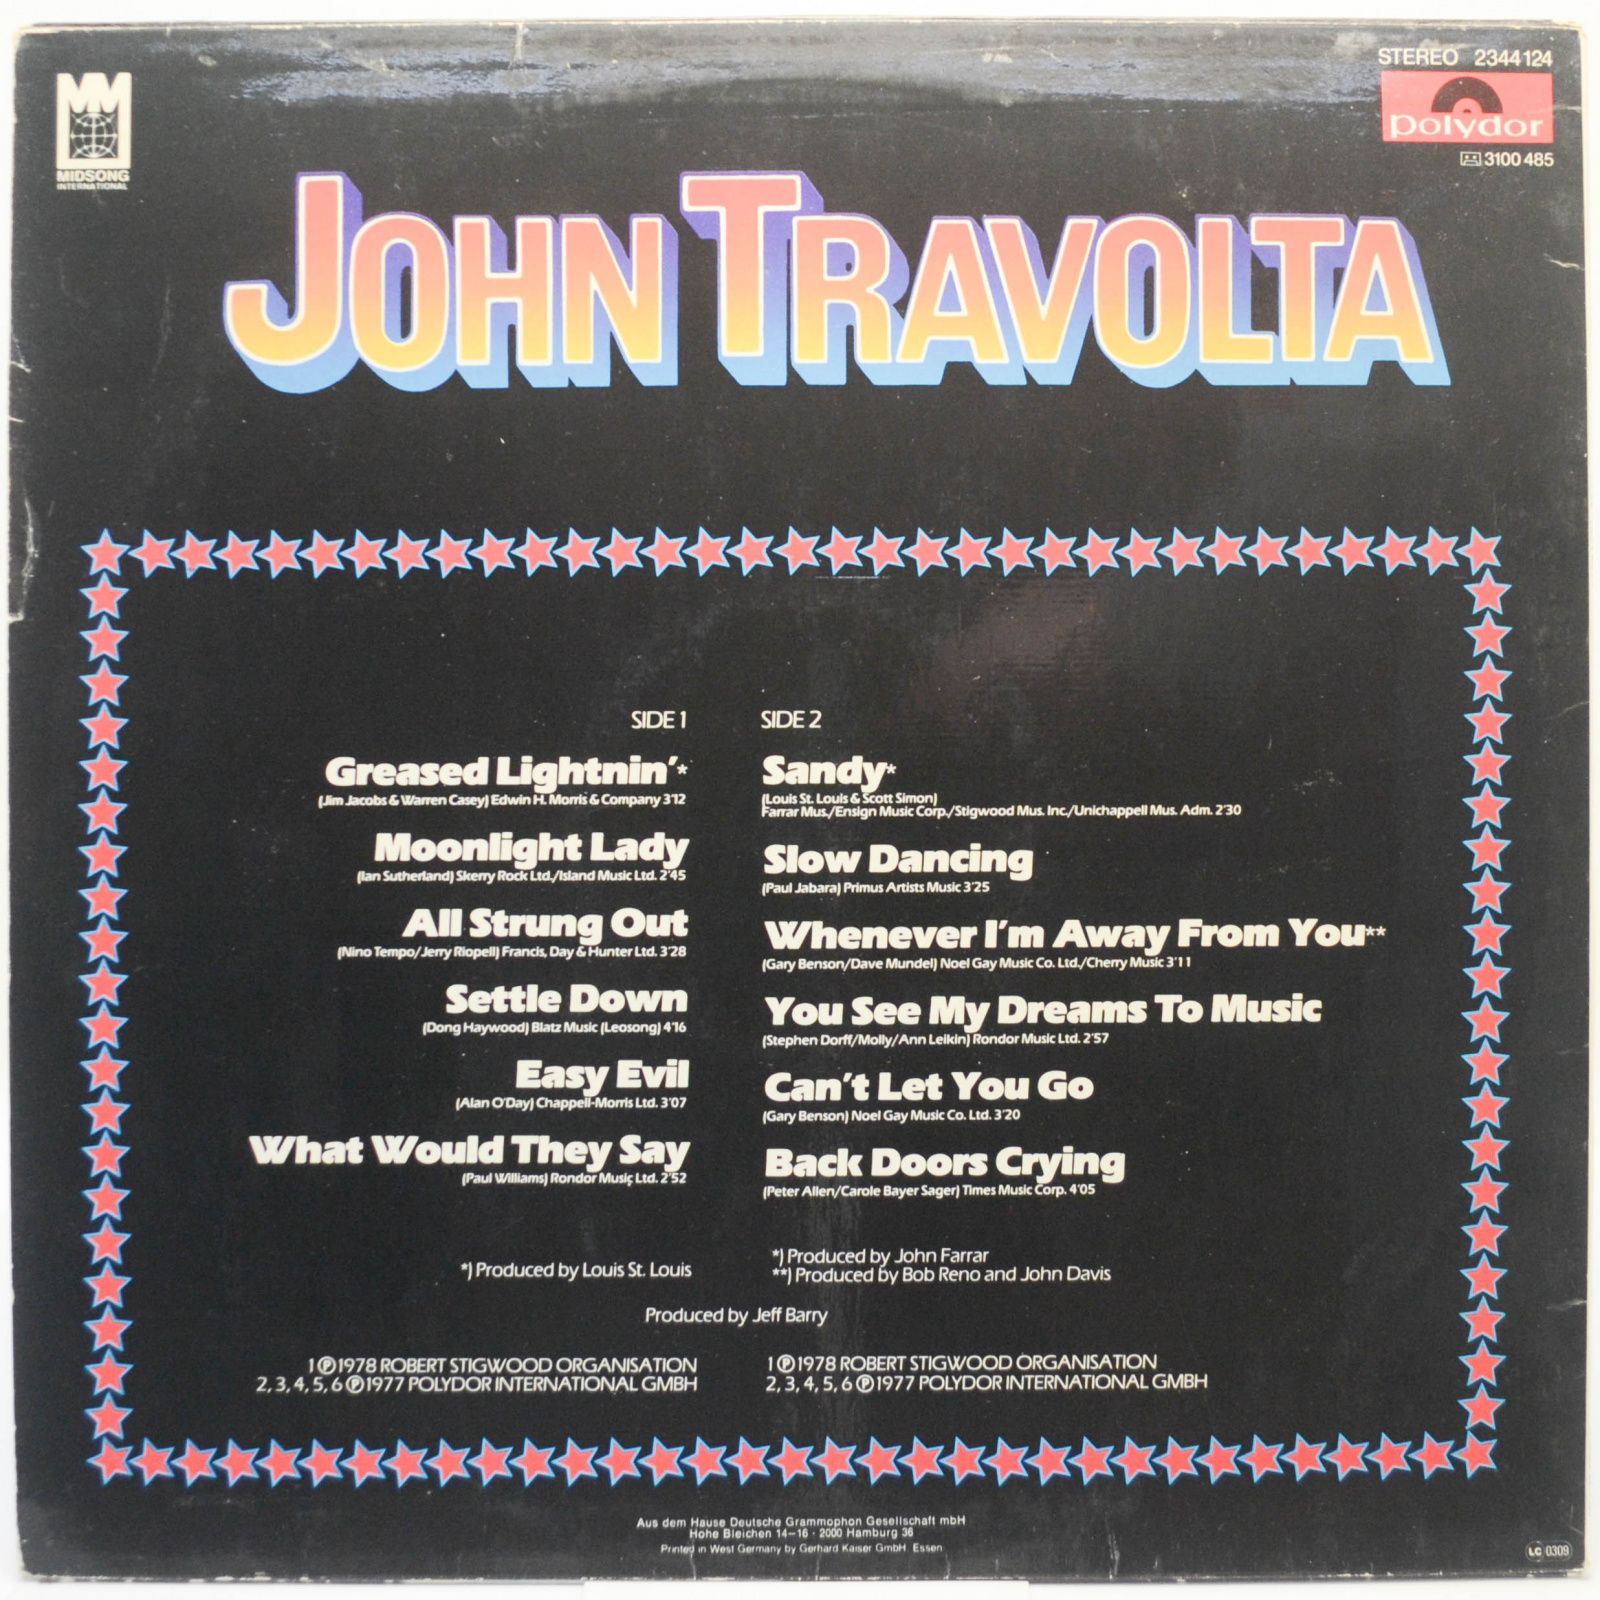 John Travolta — John Travolta, 1978